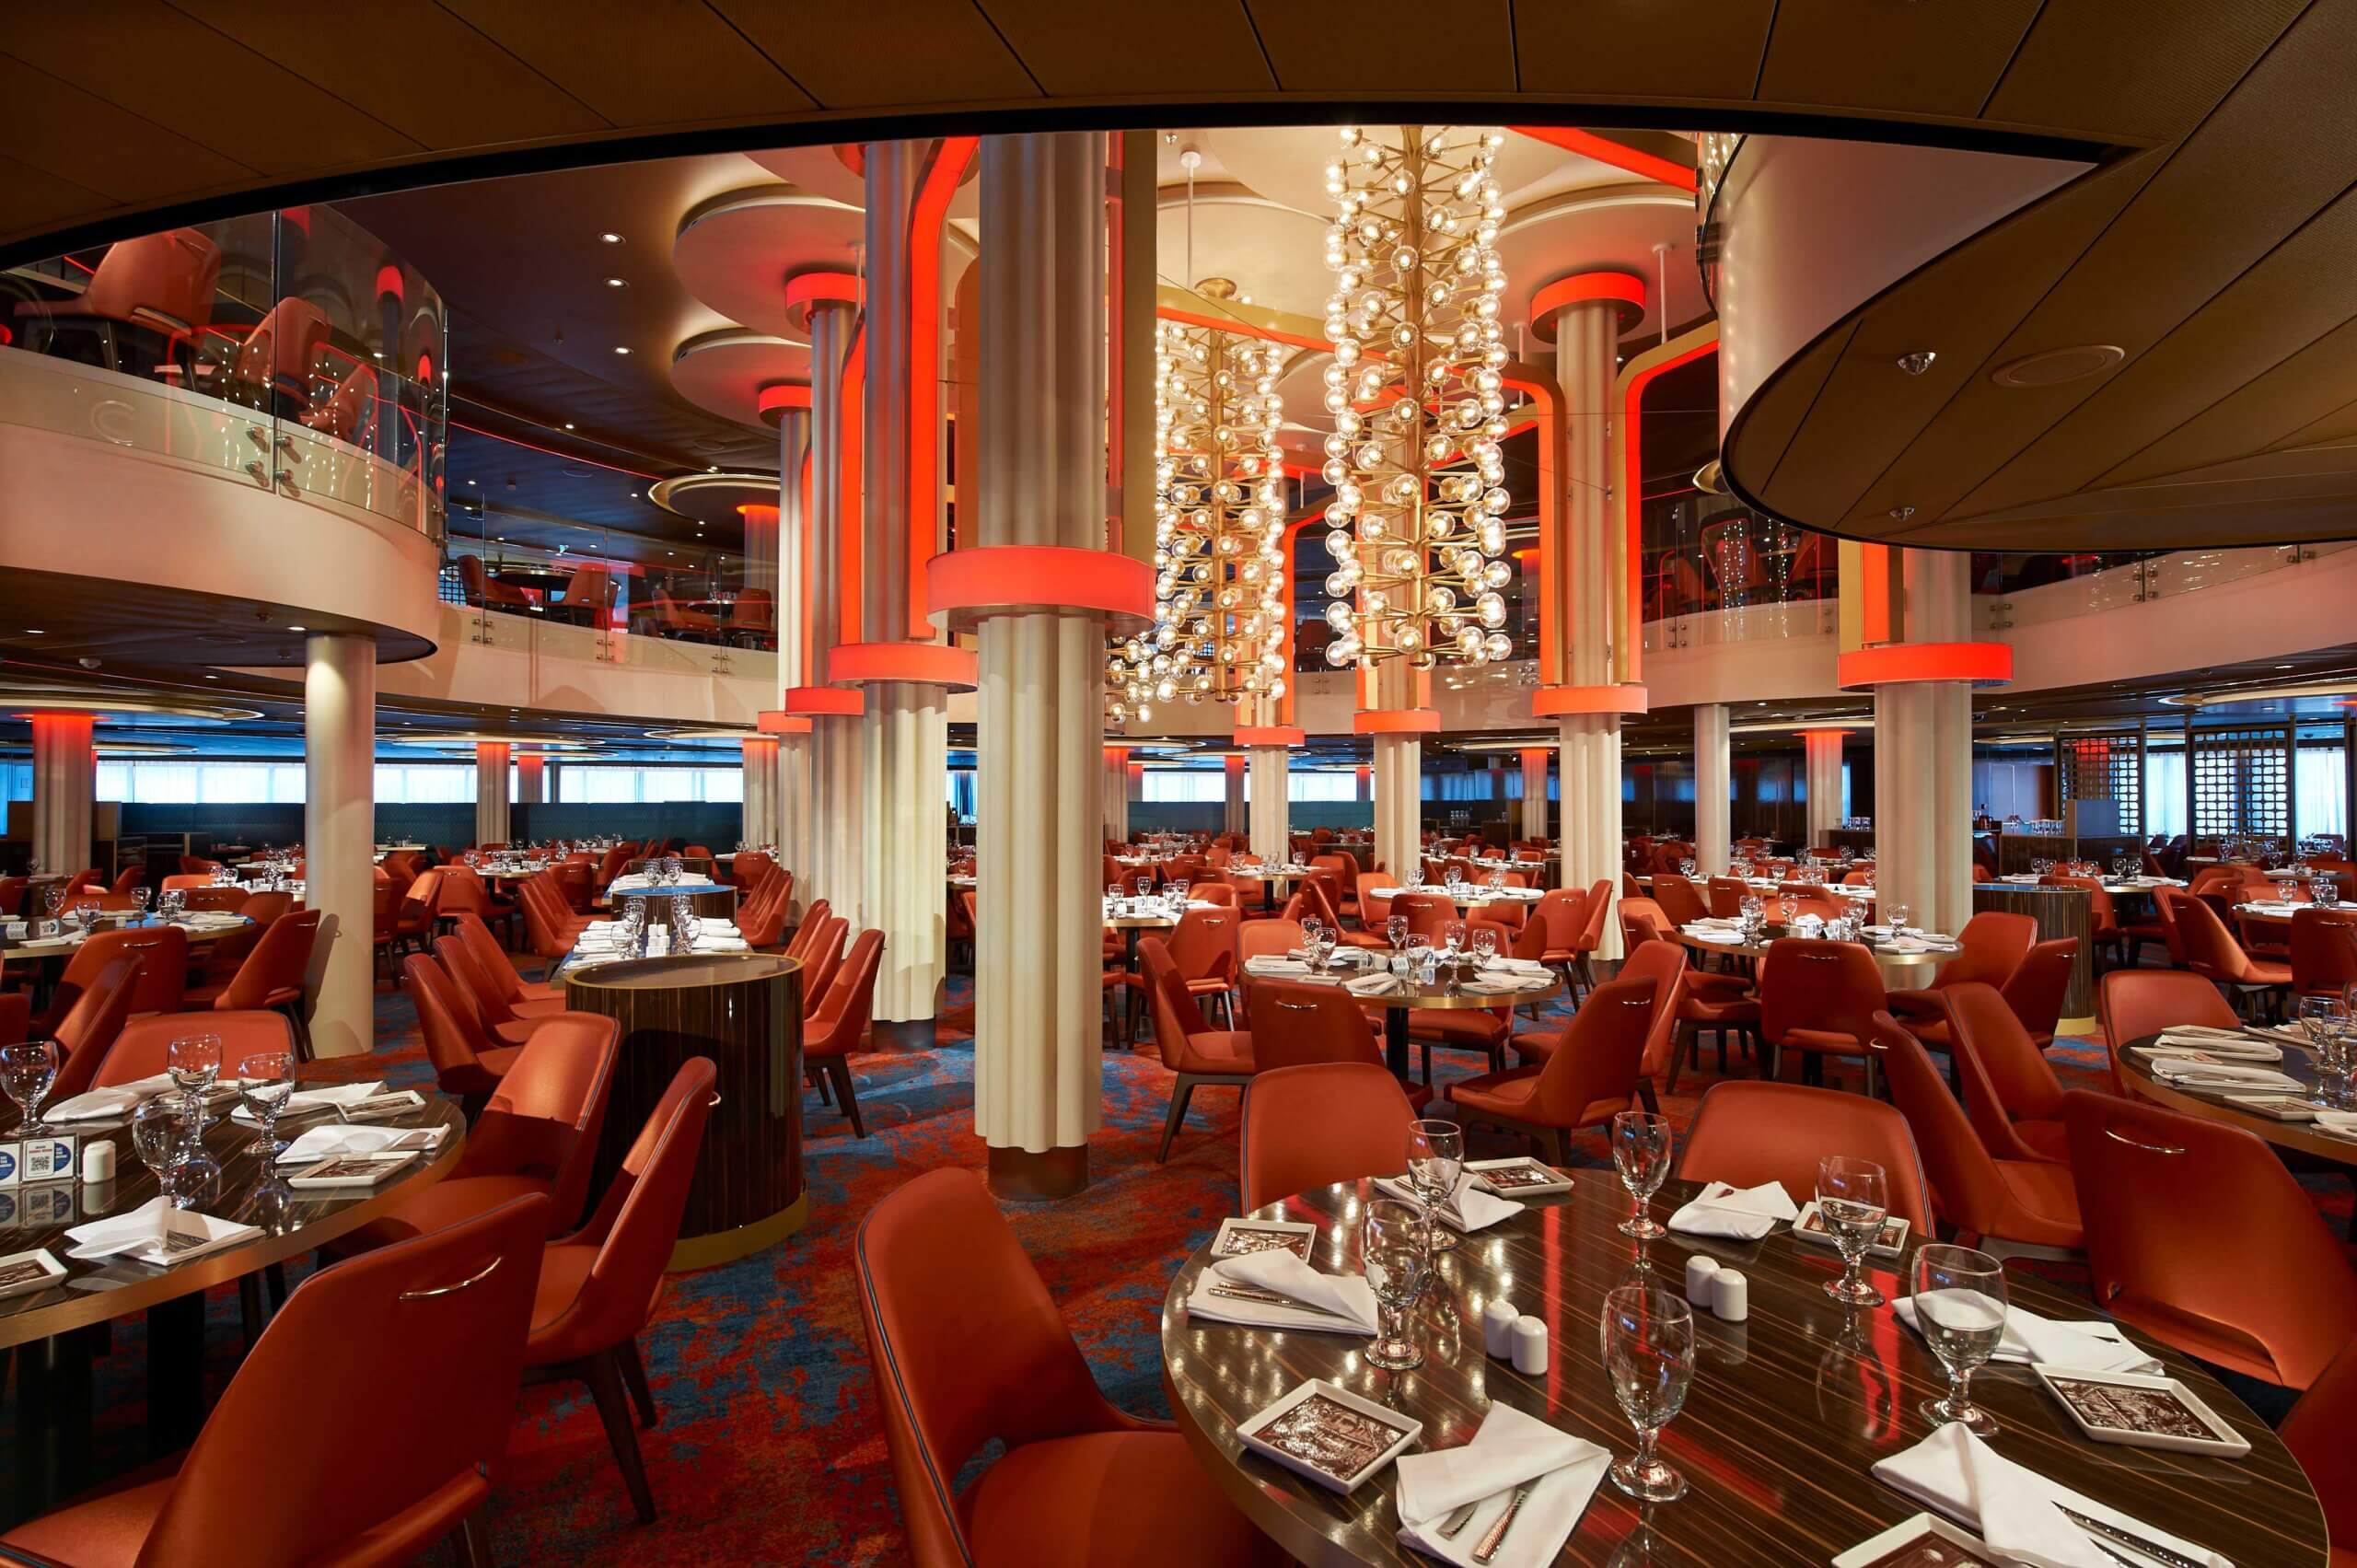 carnival cruise dinner seating arrangements